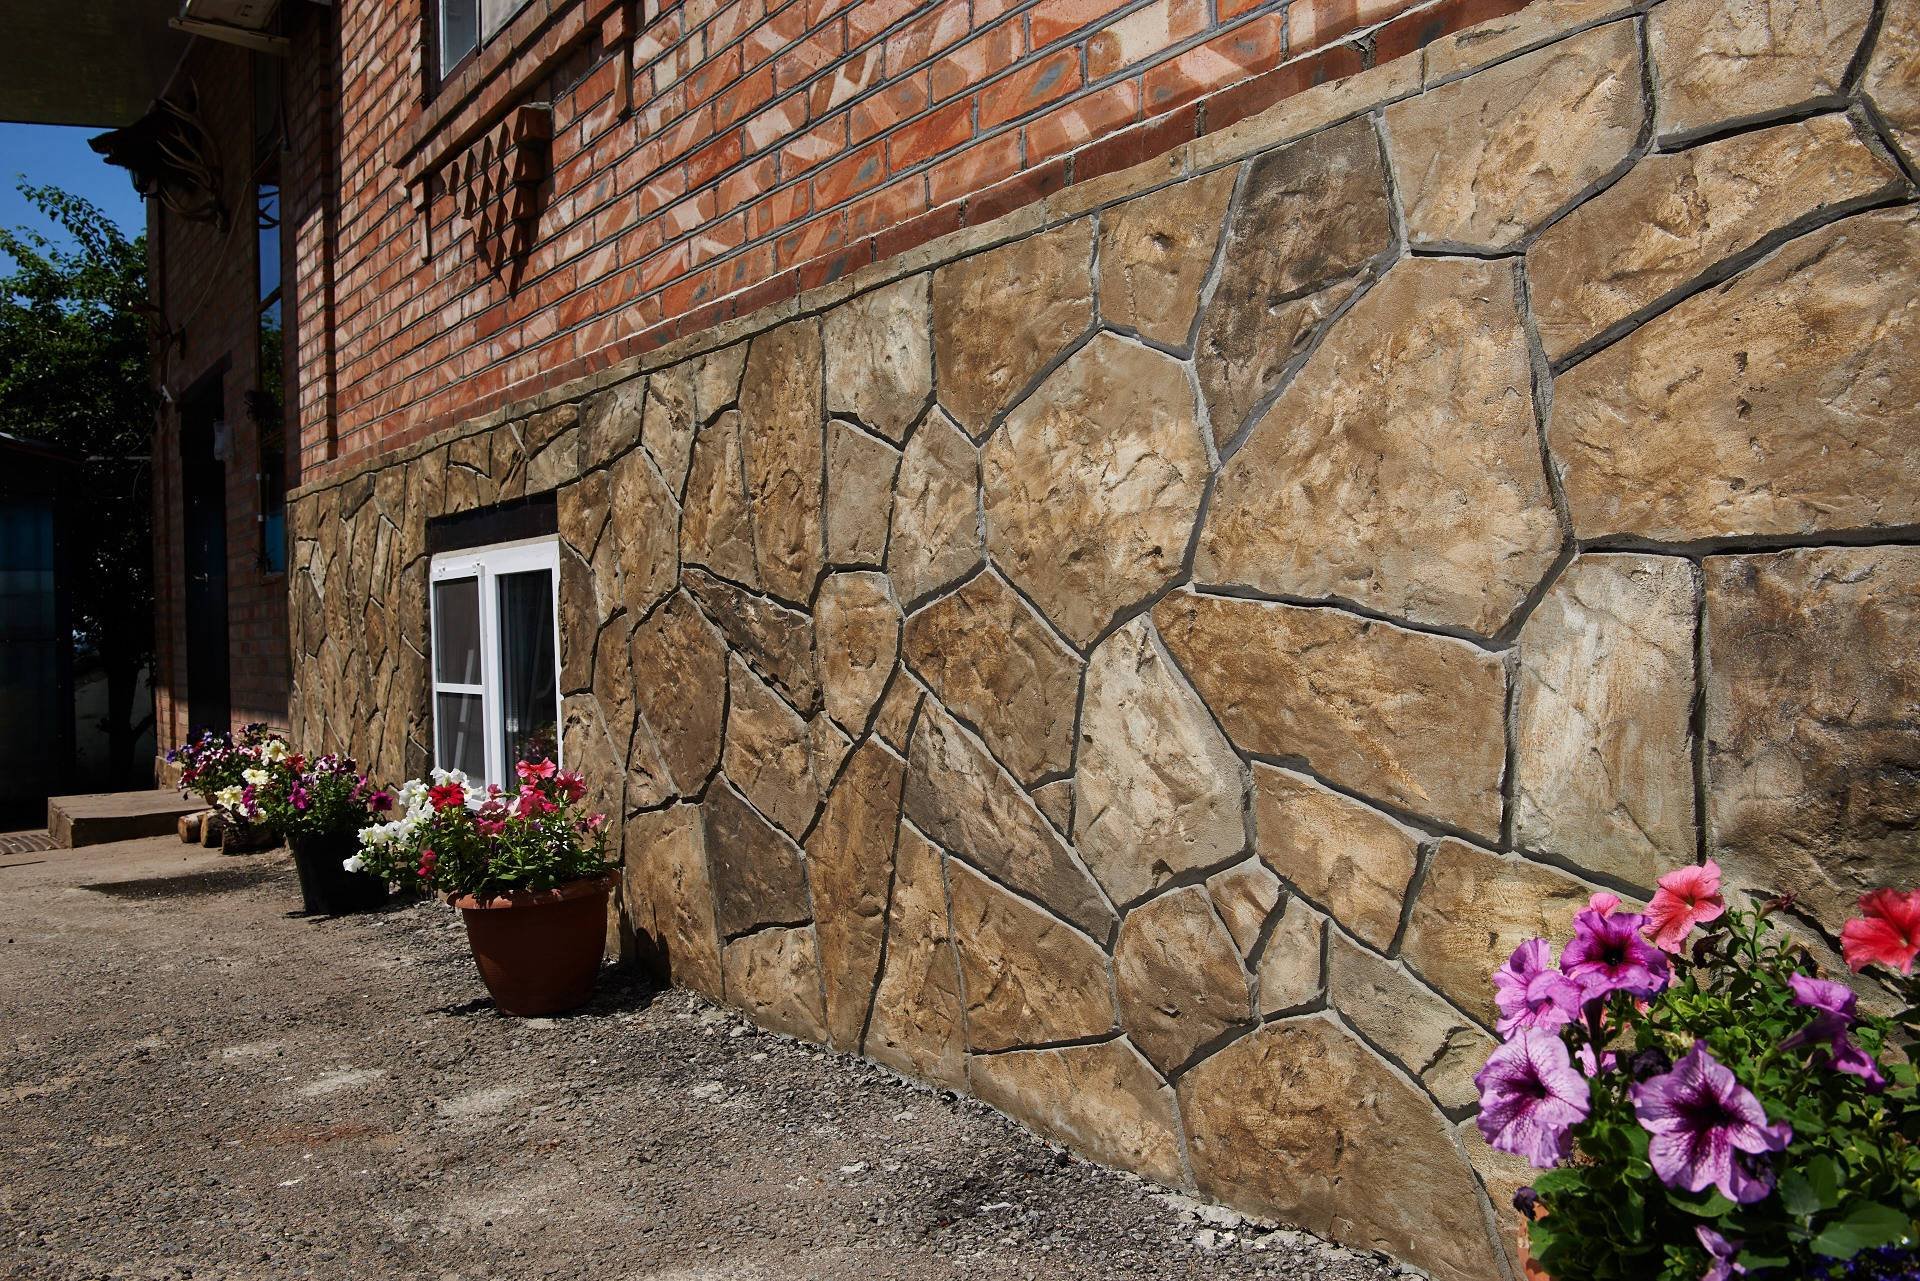 Облицовка фасада дома камнем или отделка панелями под камень